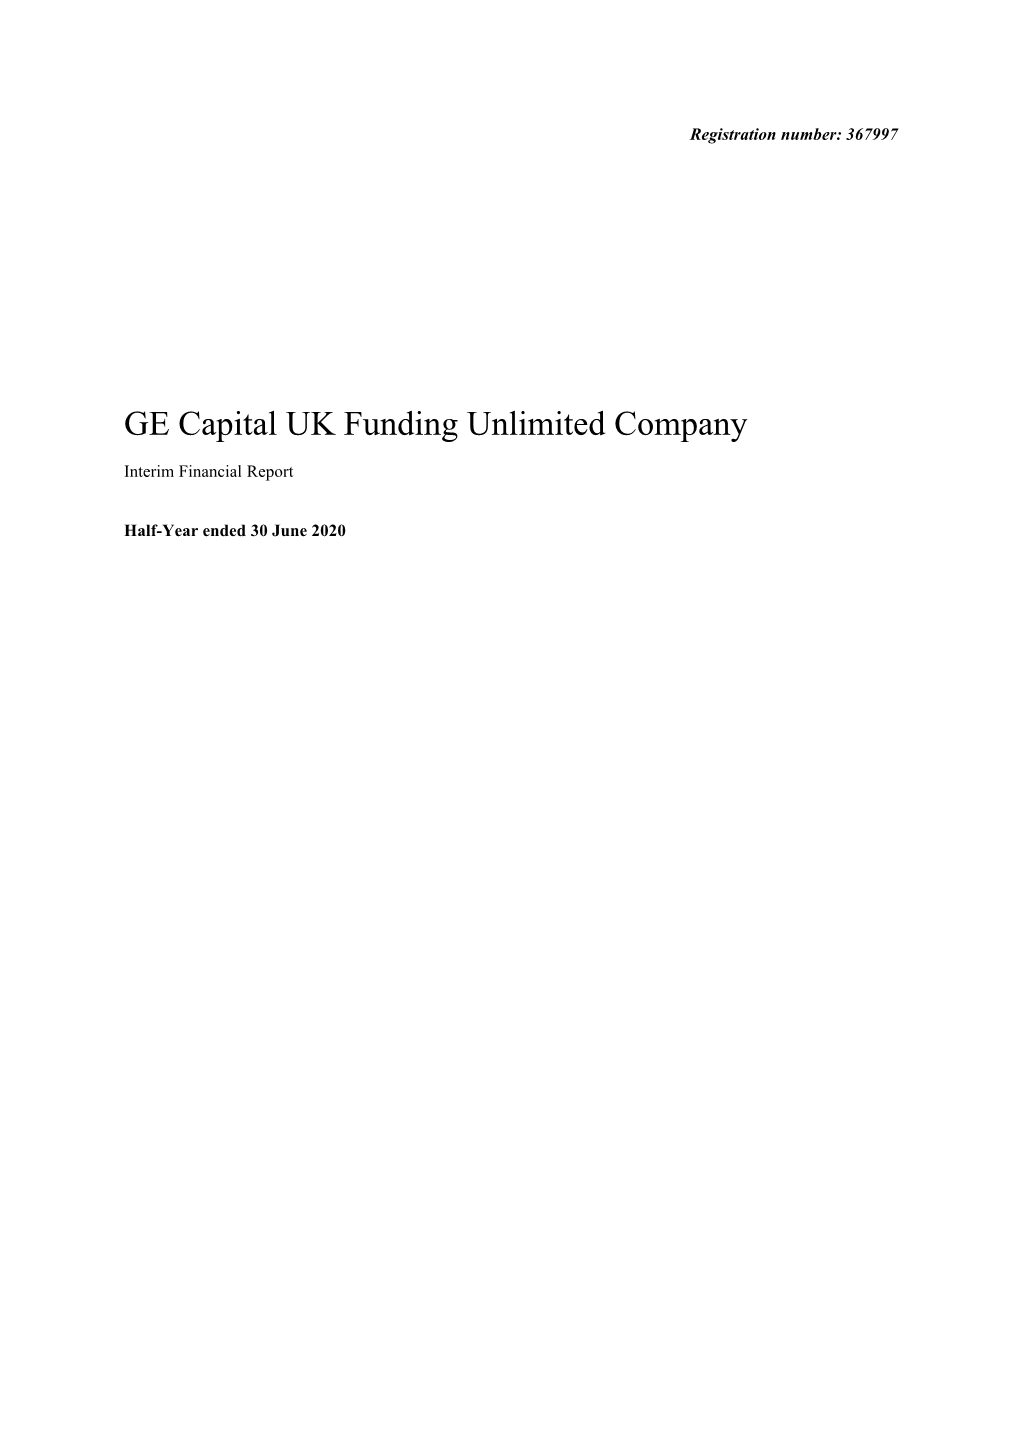 GE Capital UK Funding Unlimited Company